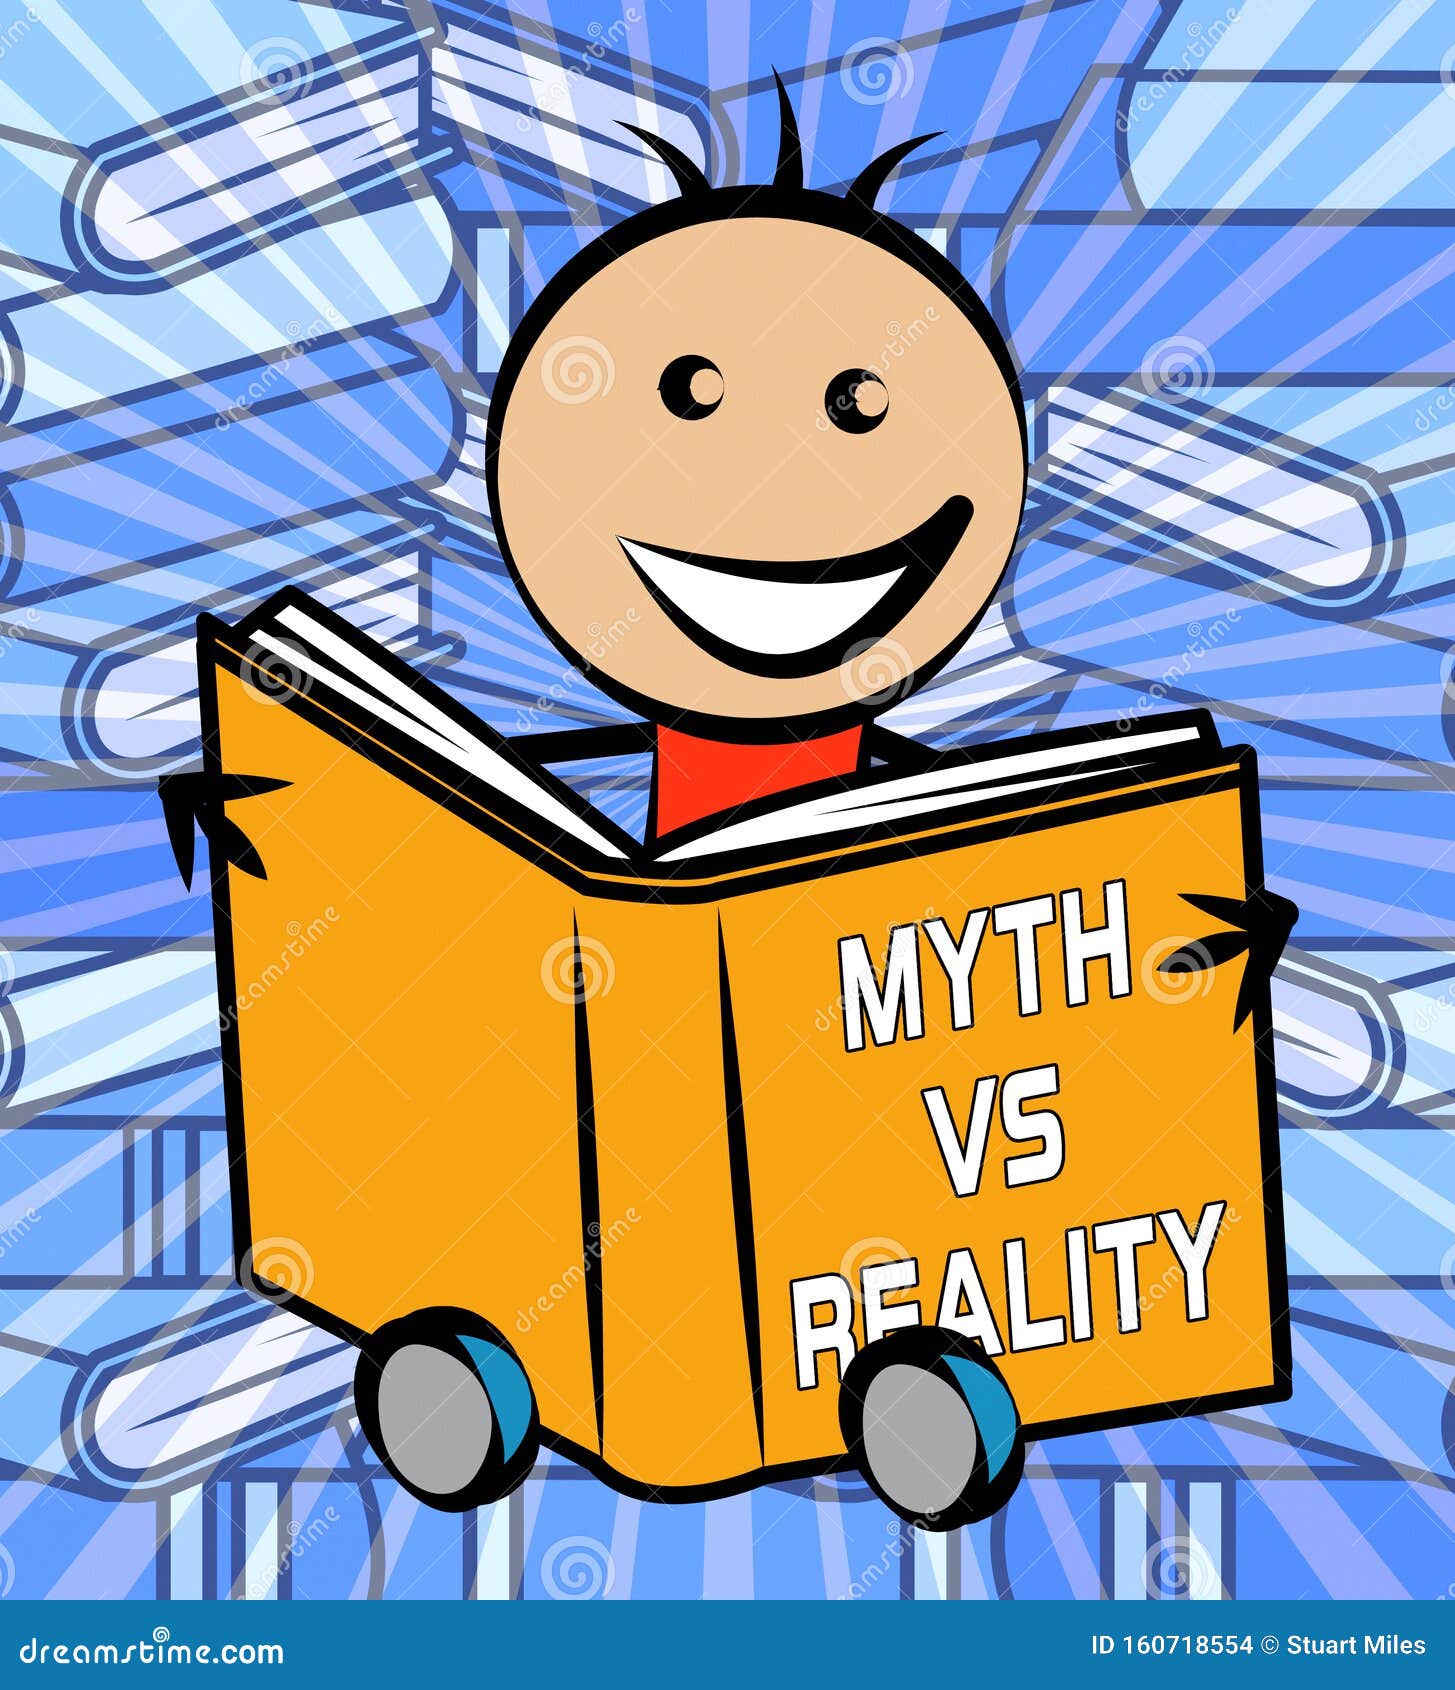 Myth Versus Reality Book Showing False Mythology Vs Real Life - 3d